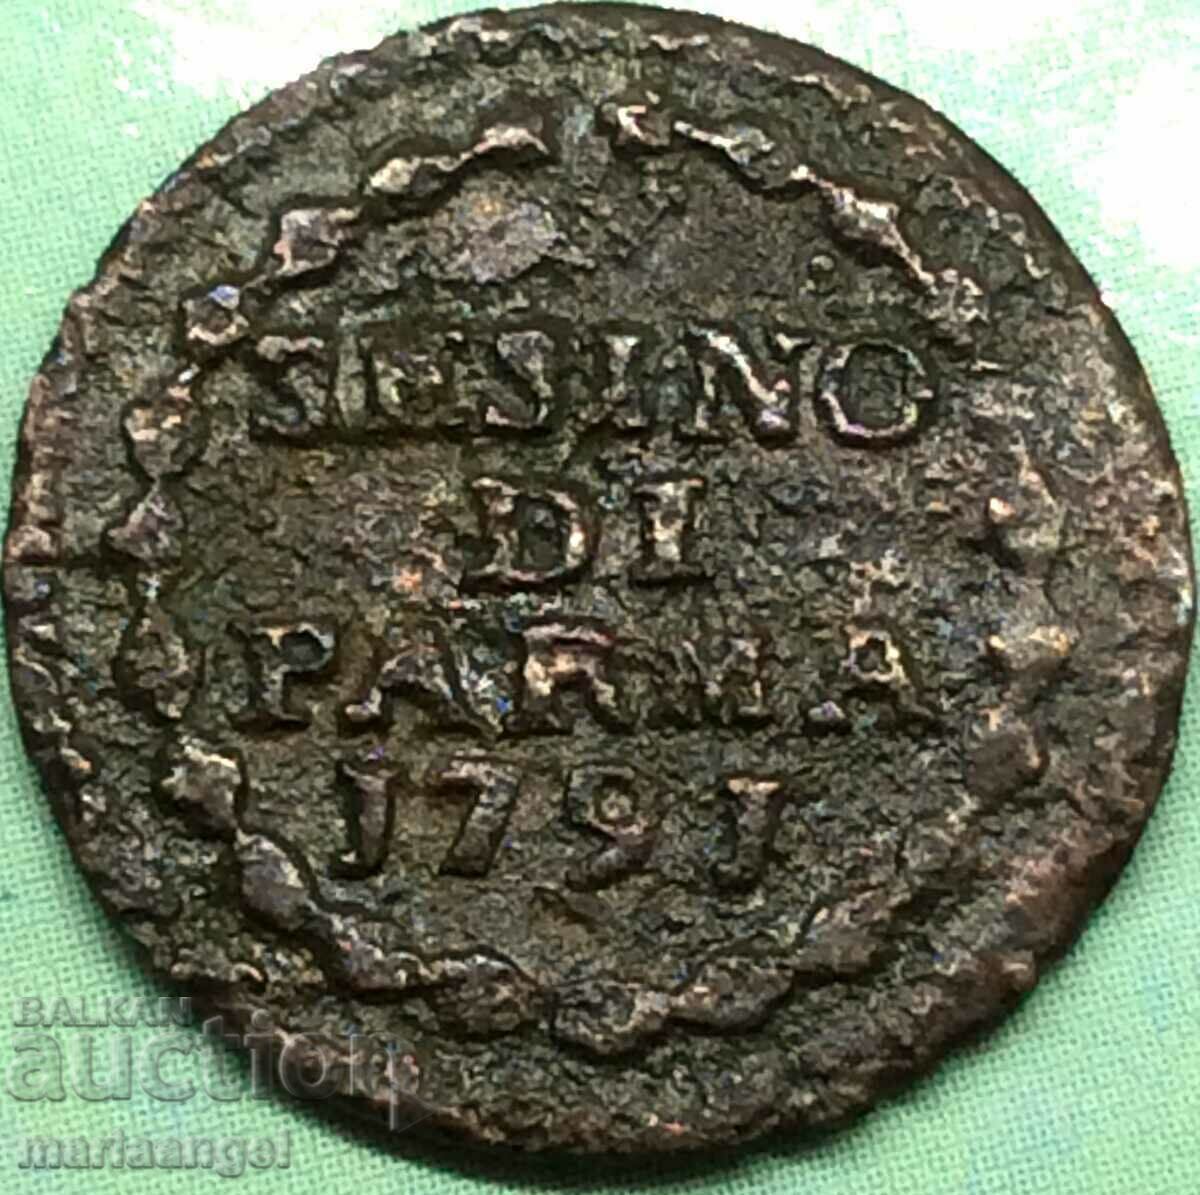 Parma Sessino 1791 Italy Ferdinand Copper Coin